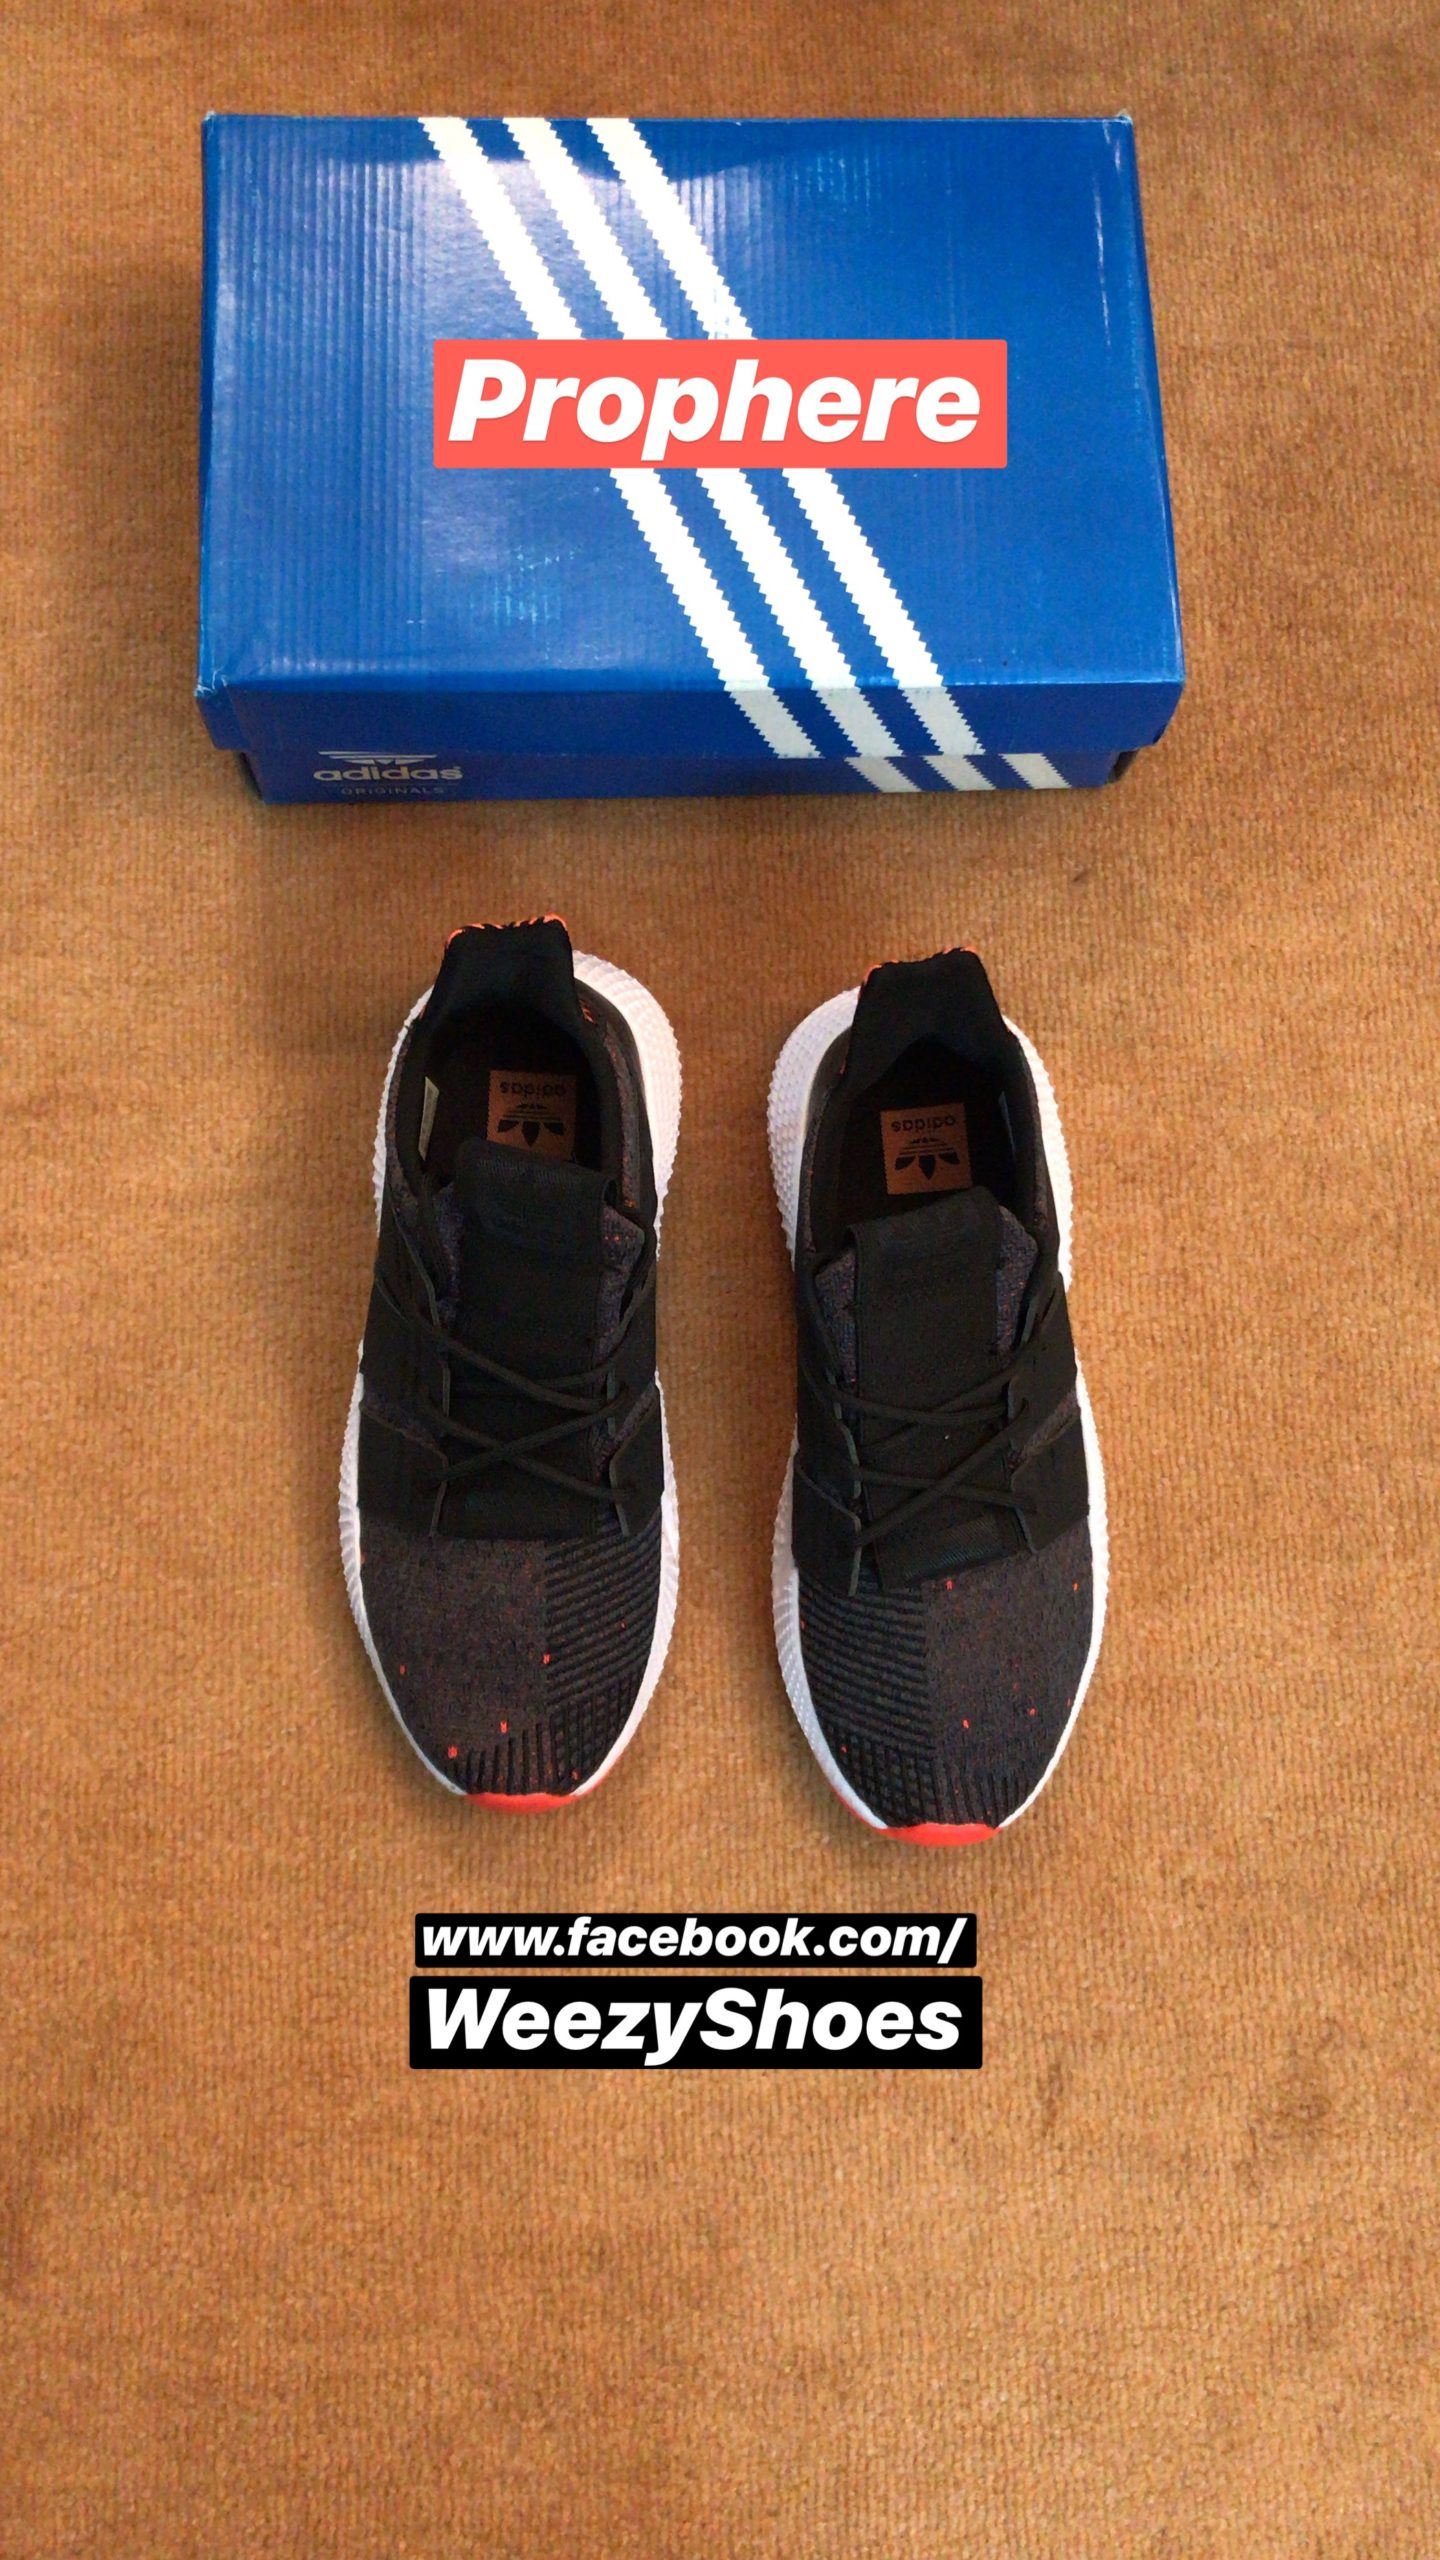 Adidas Prophere Sneakers